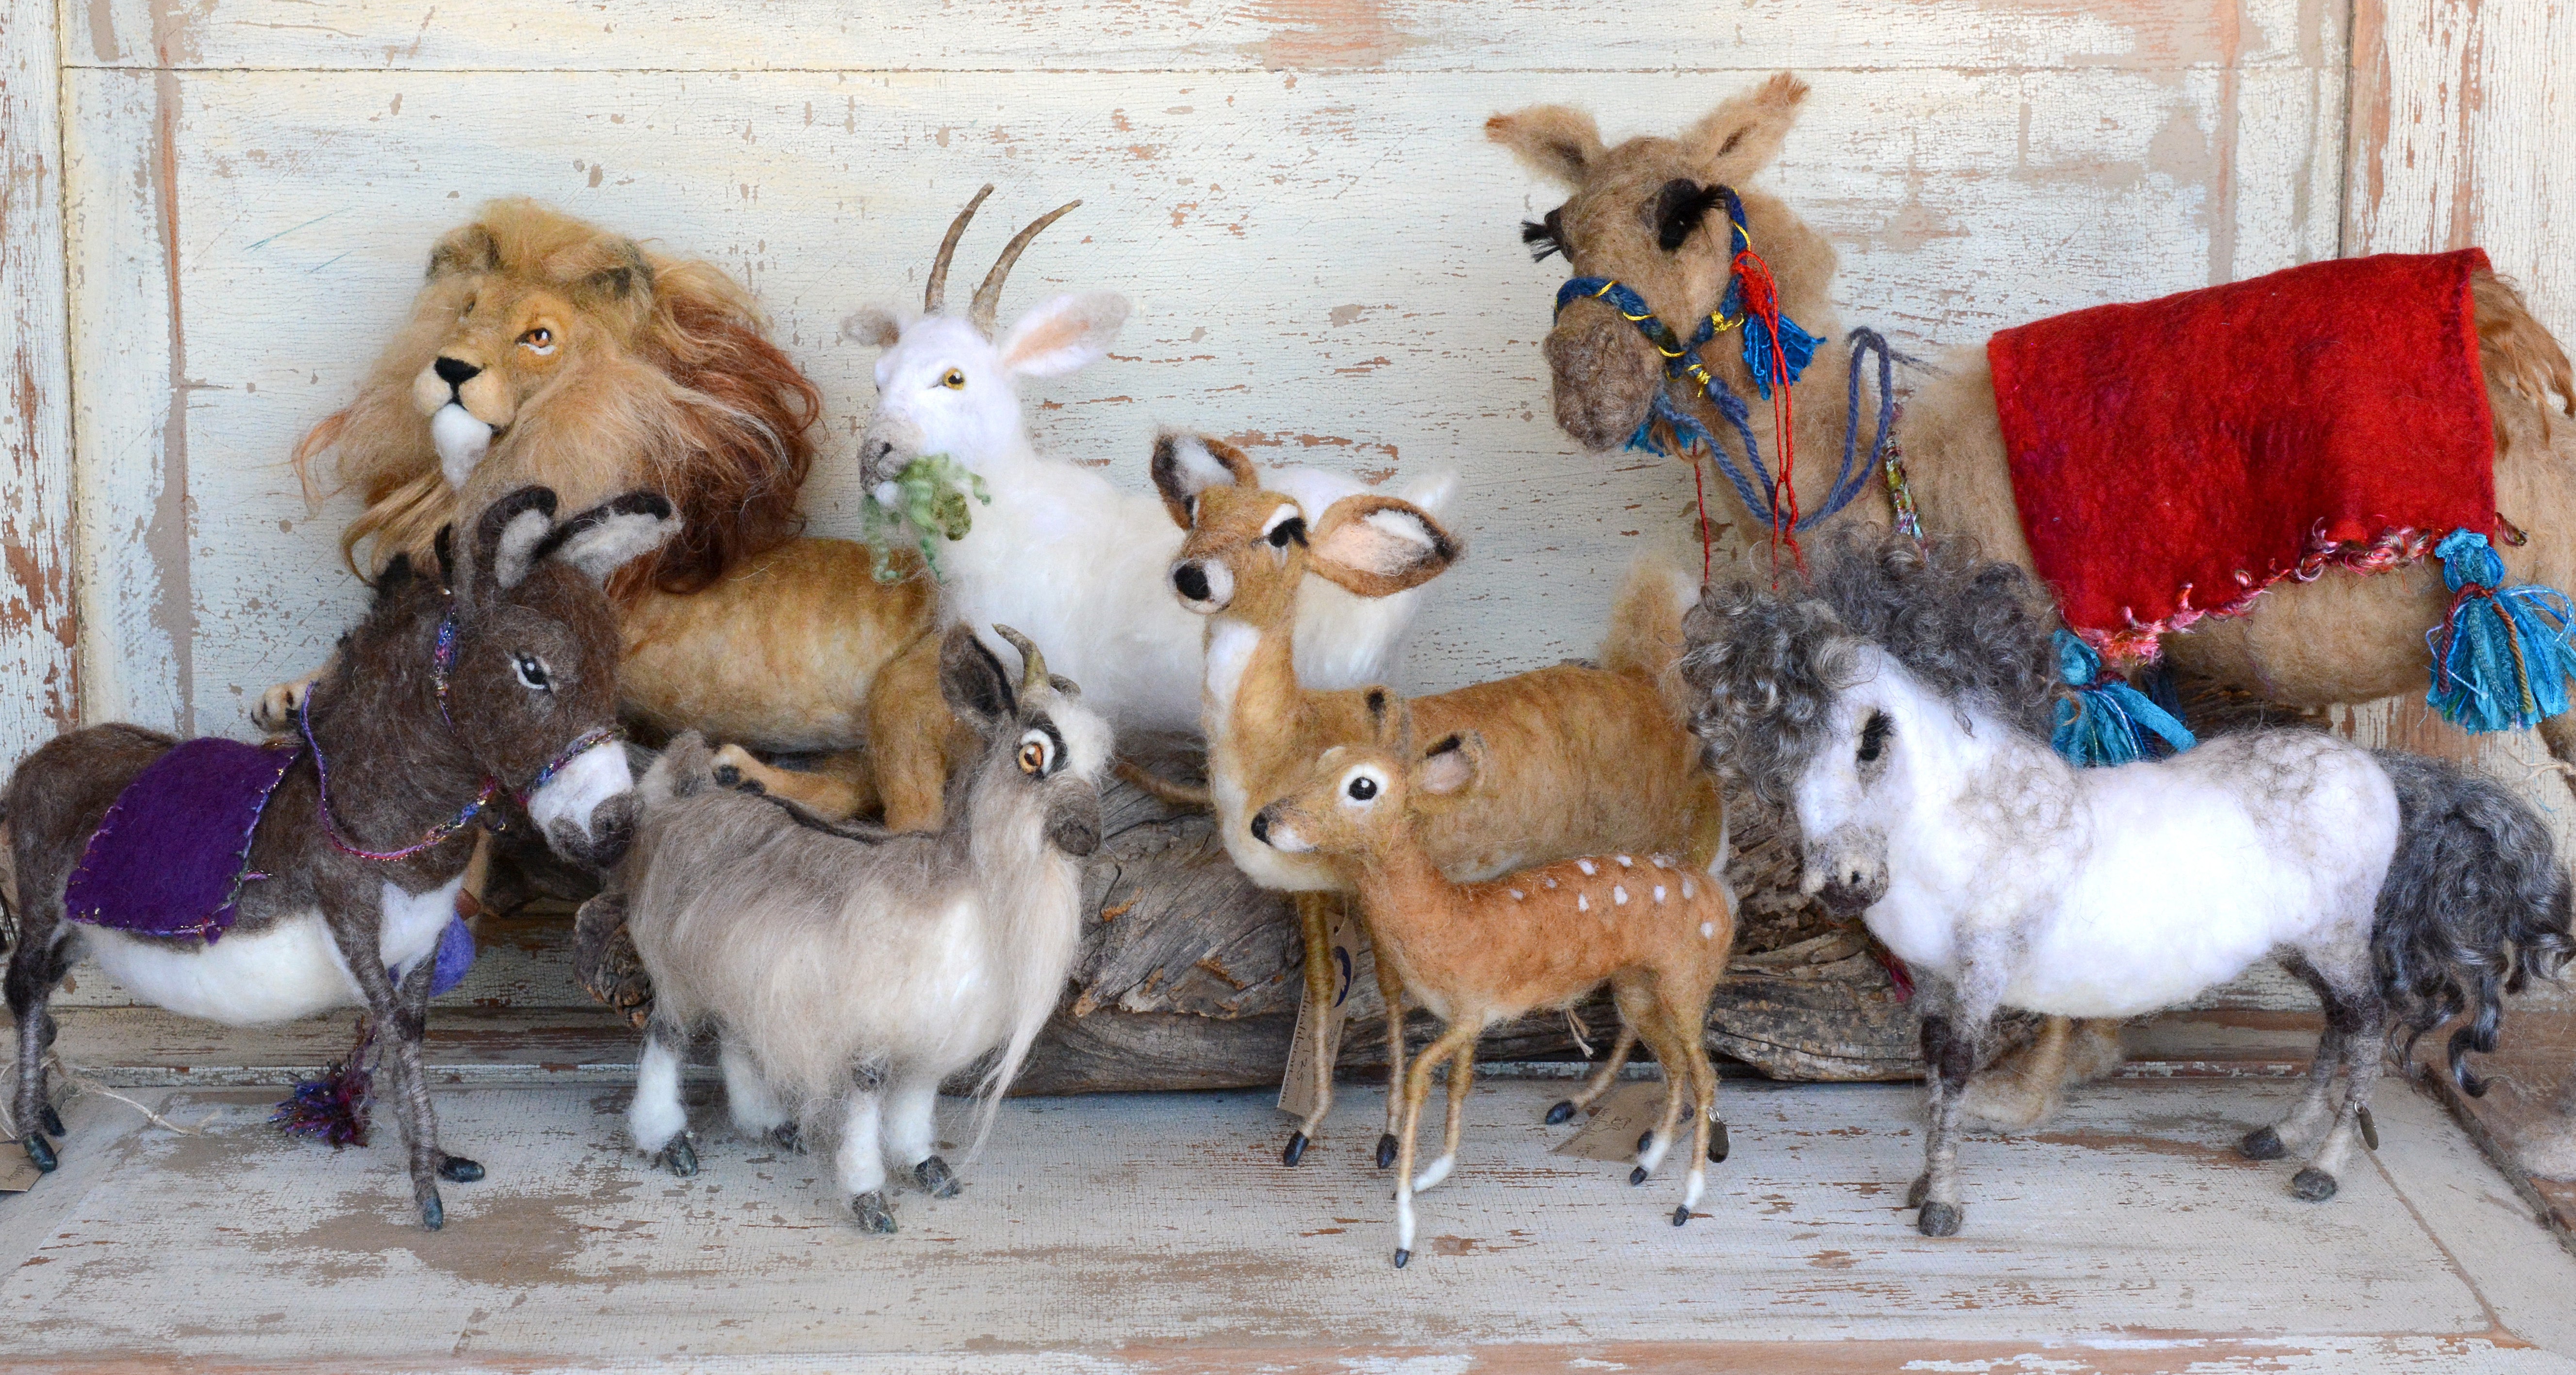 Mini Needle Felting Kit with BONUS Animal Kit! Your Choice- Bird or Cat –  Wisteria Suri Ranch